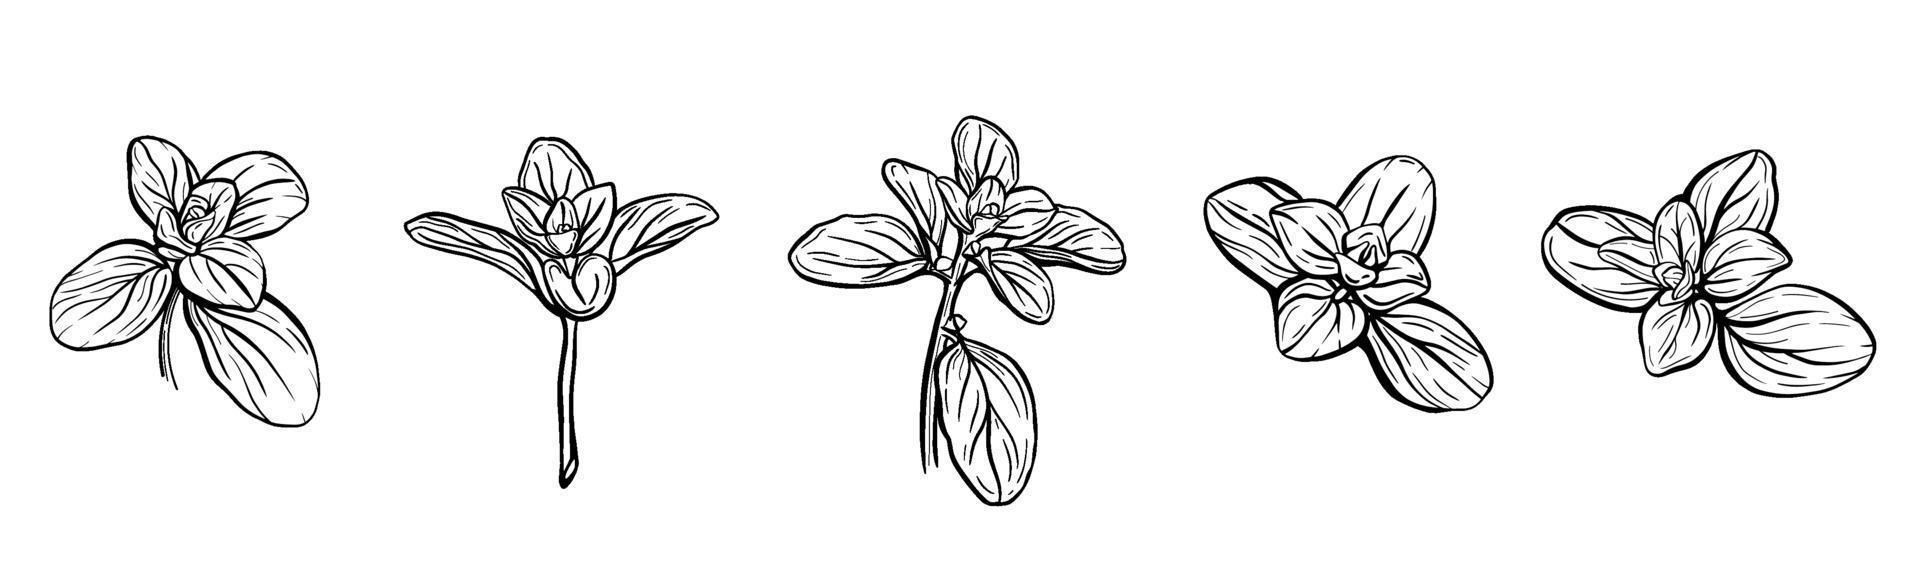 set di foglie di basilico vettore